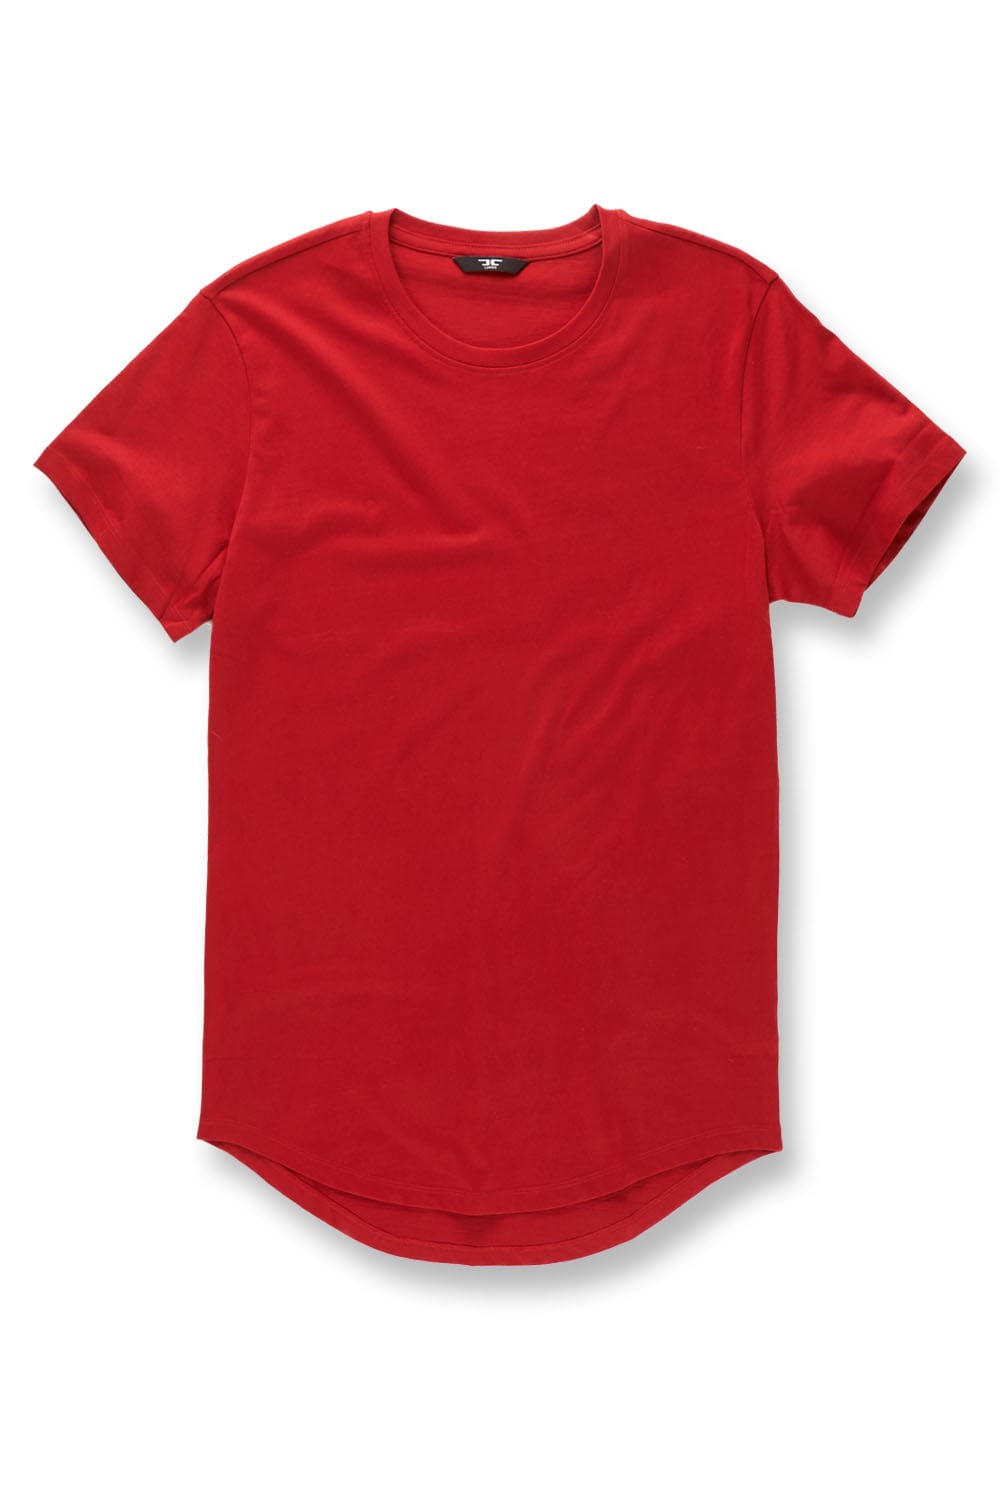 Jordan Craig Scallop T-Shirt Red / S